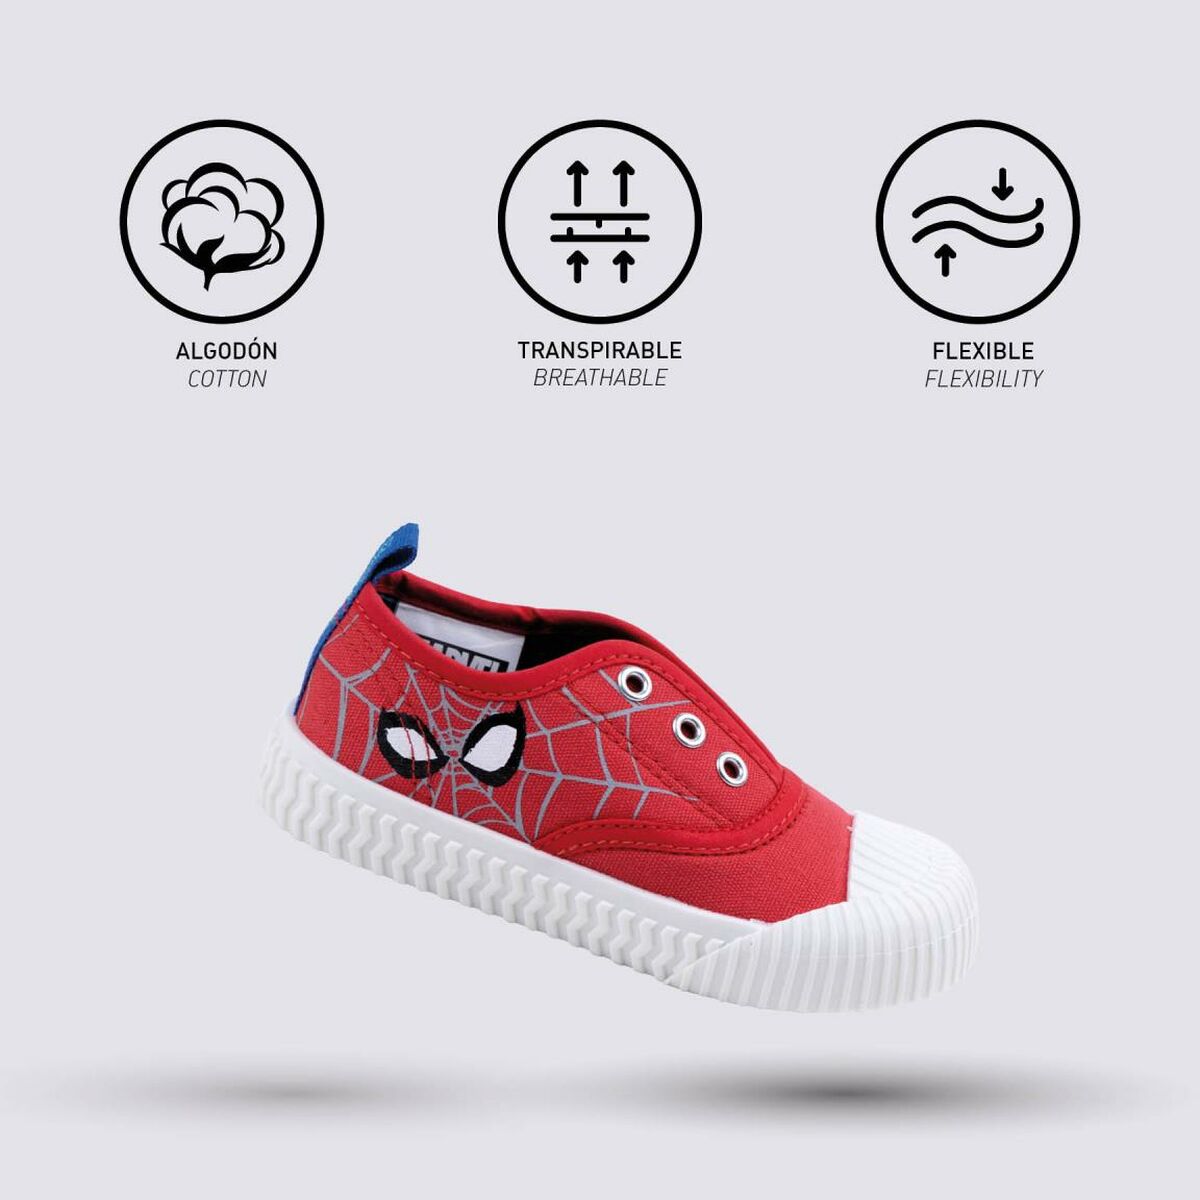 Adidași Casual Copii Spiderman Roșu - Mărime la picior 23